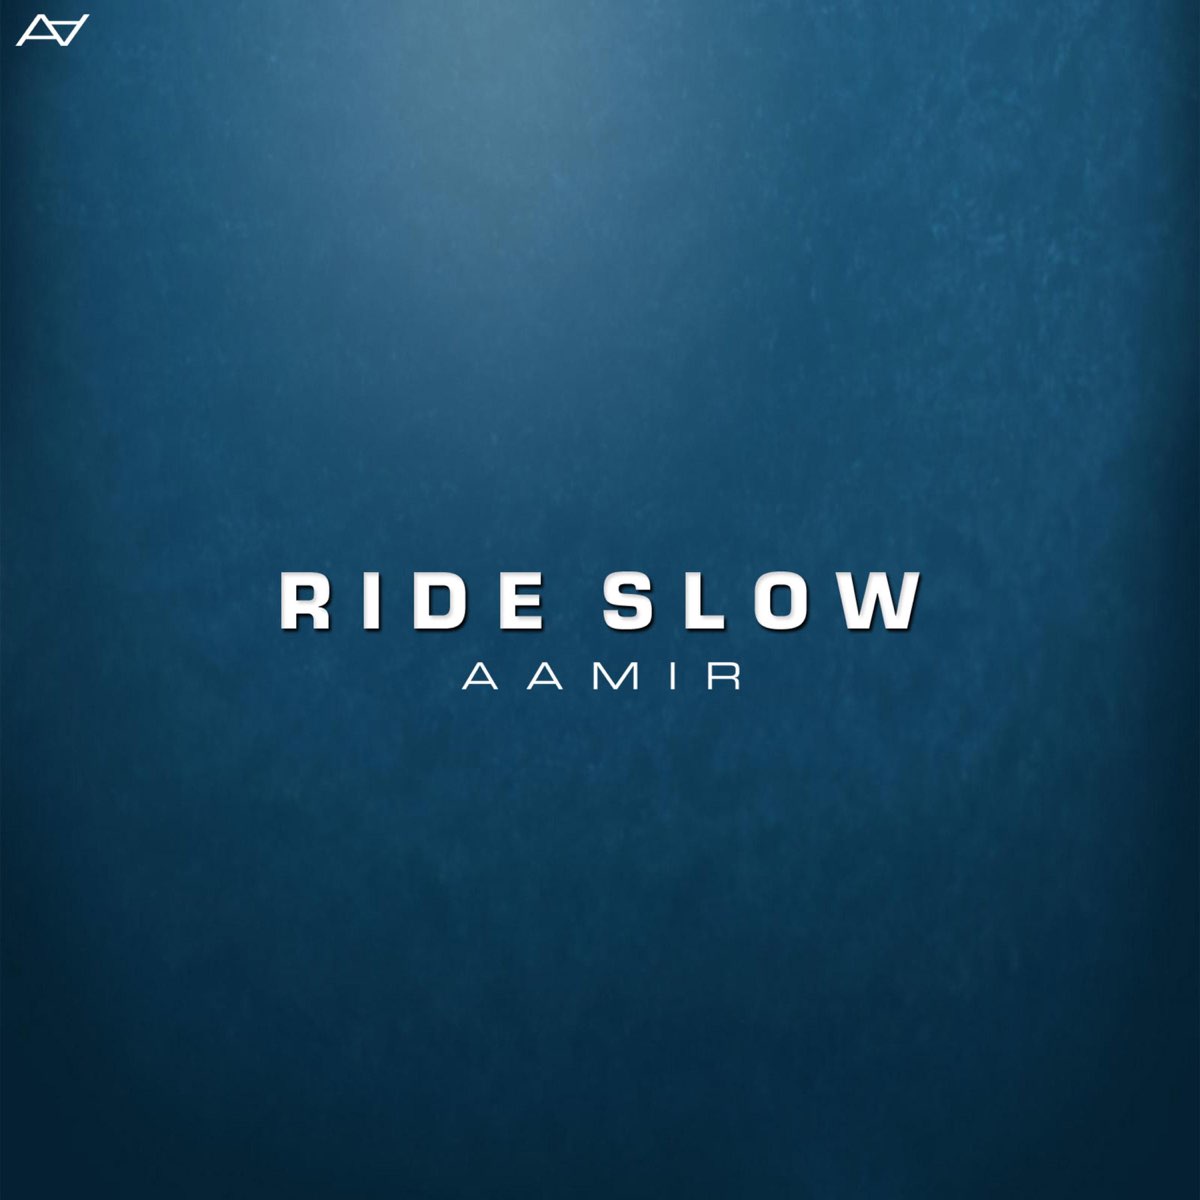 Ride album. Ride it slowed